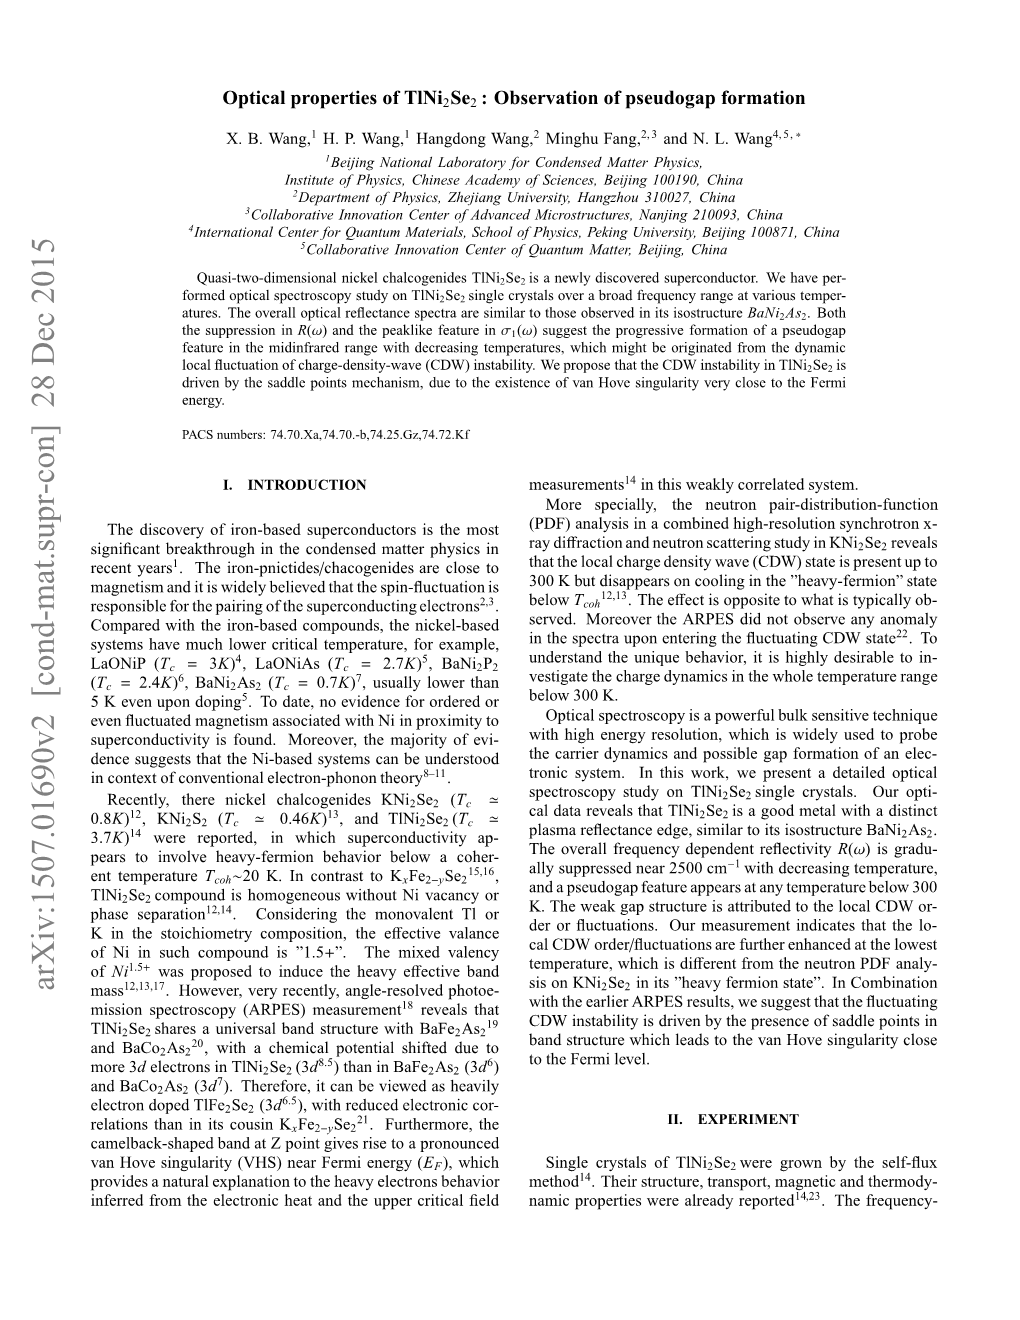 Optical Properties of Tlni2se2 : Observation of Pseudogap Formation